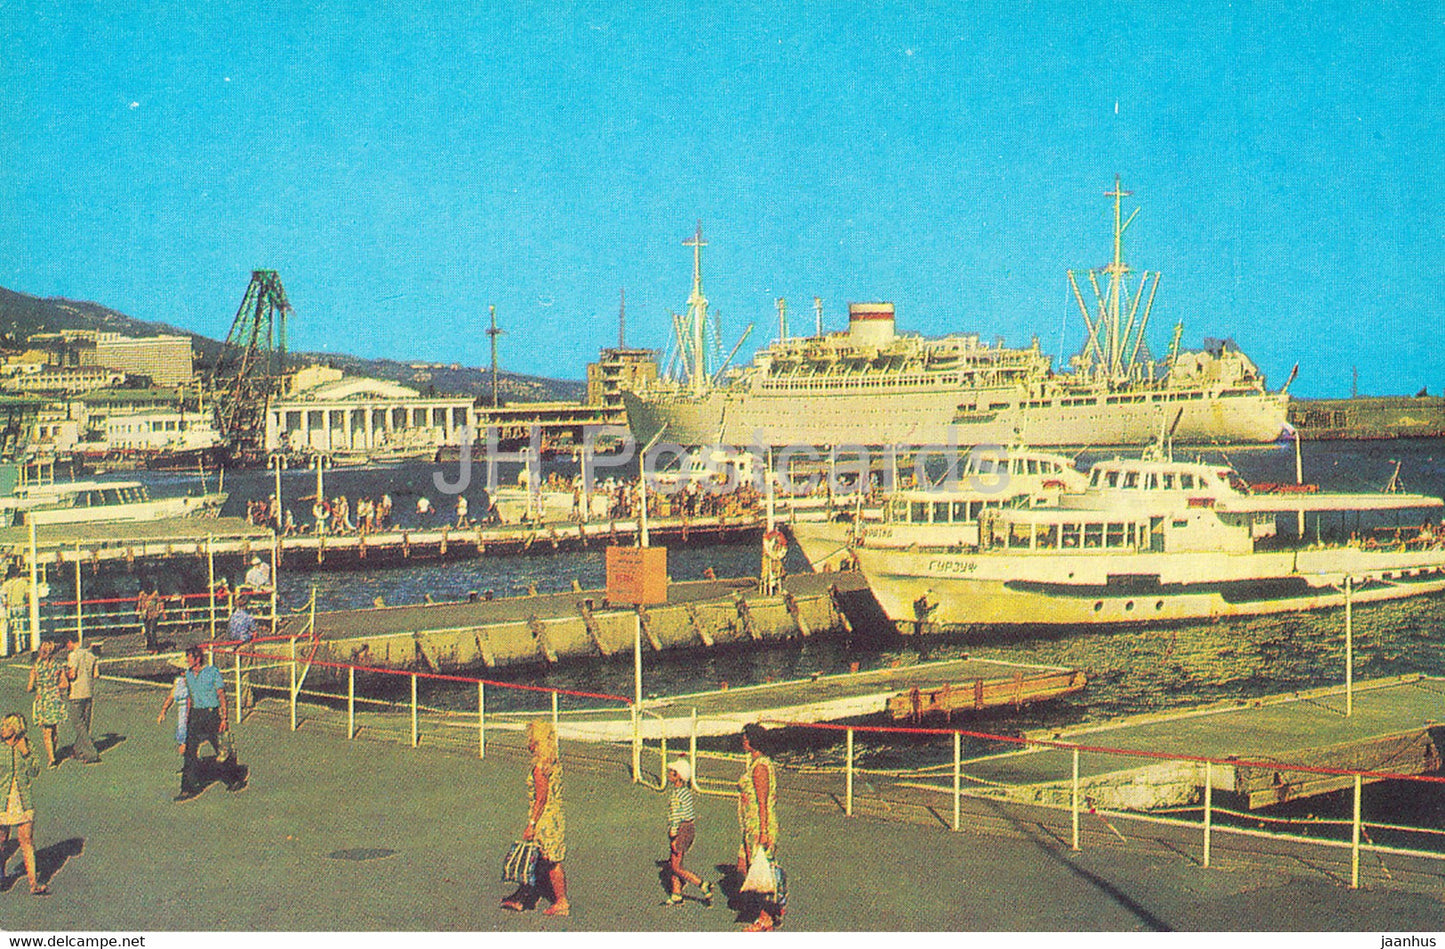 Yalta - Crimea - Sea Port - ship - 1977 - Ukraine USSR - unused - JH Postcards